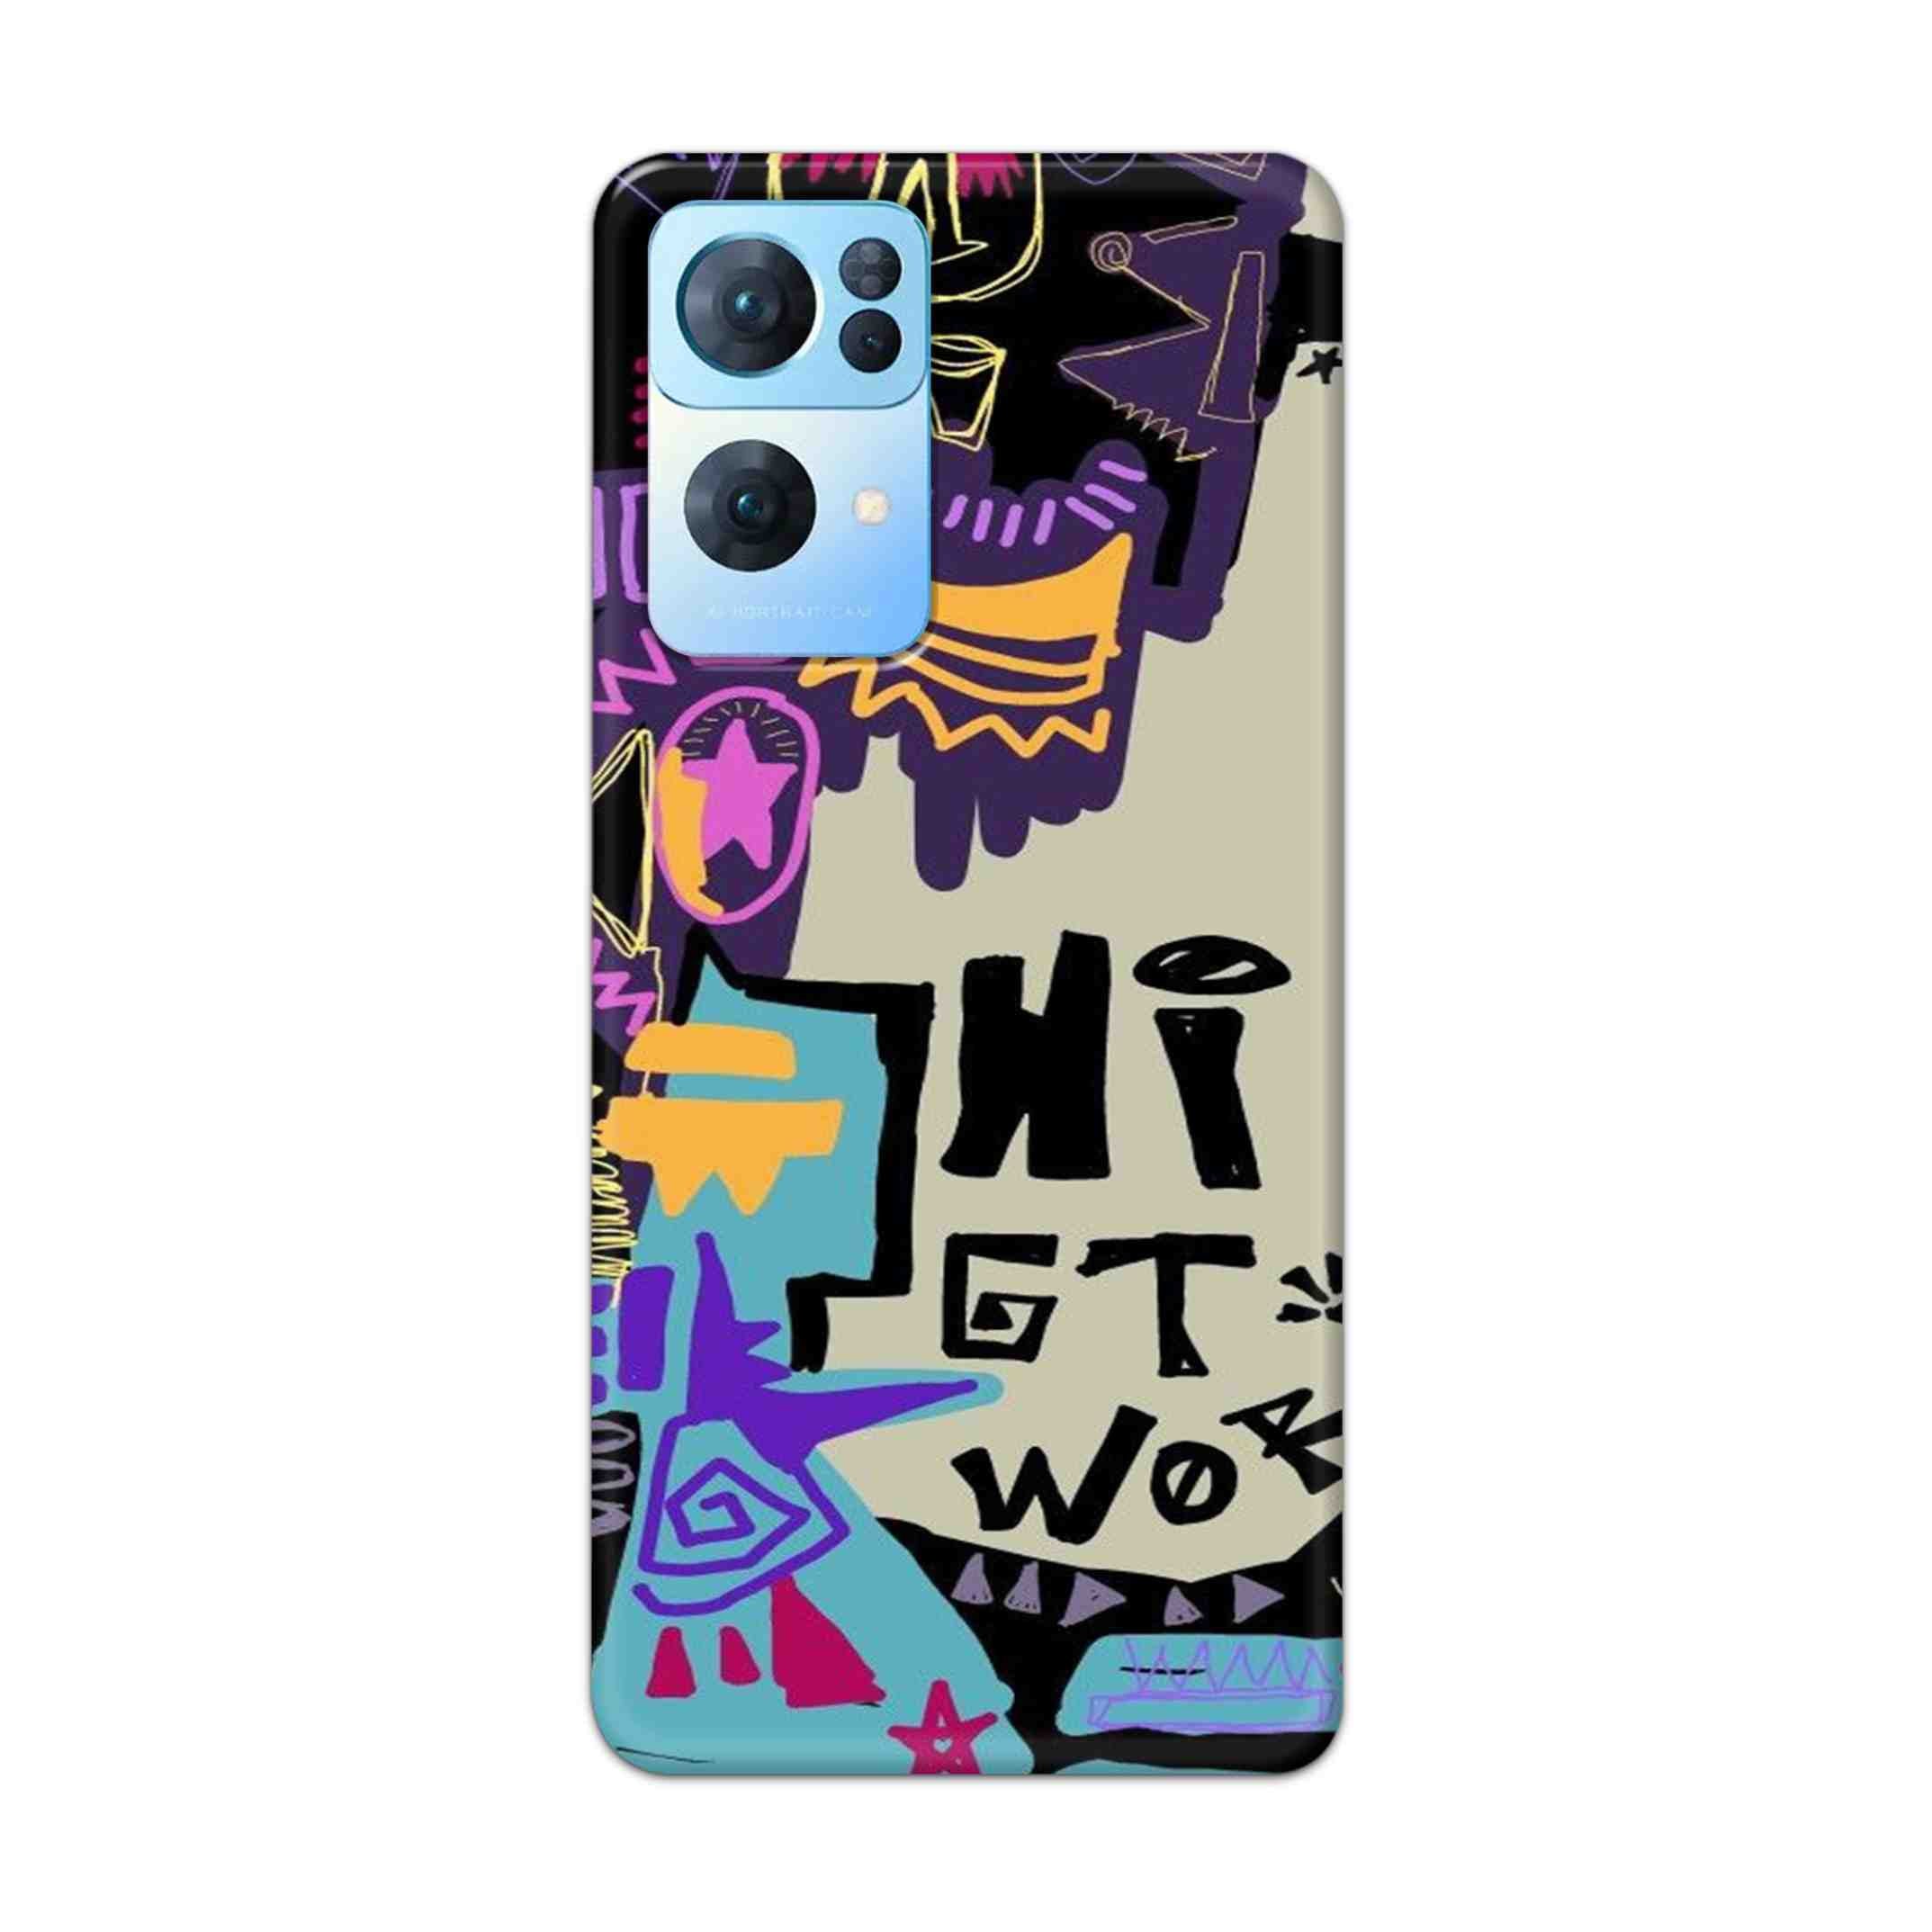 Buy Hi Gt World Hard Back Mobile Phone Case Cover For Oppo Reno 7 Pro Online